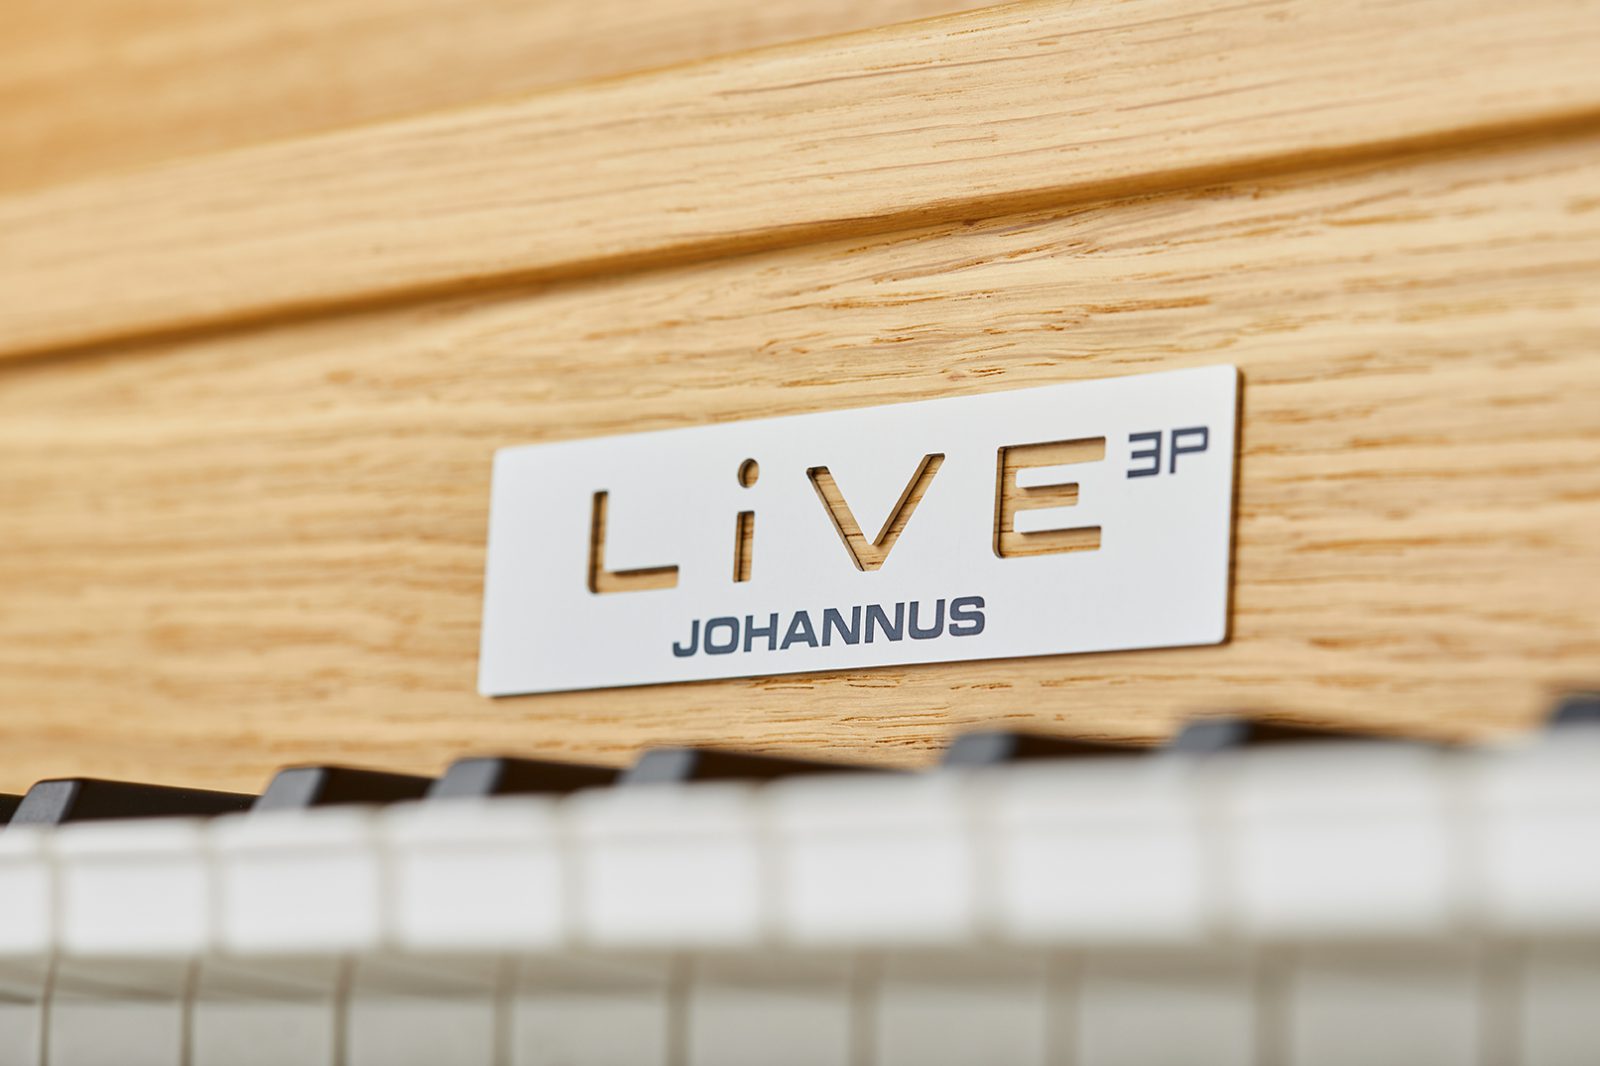 Johannus Live 3P Andante